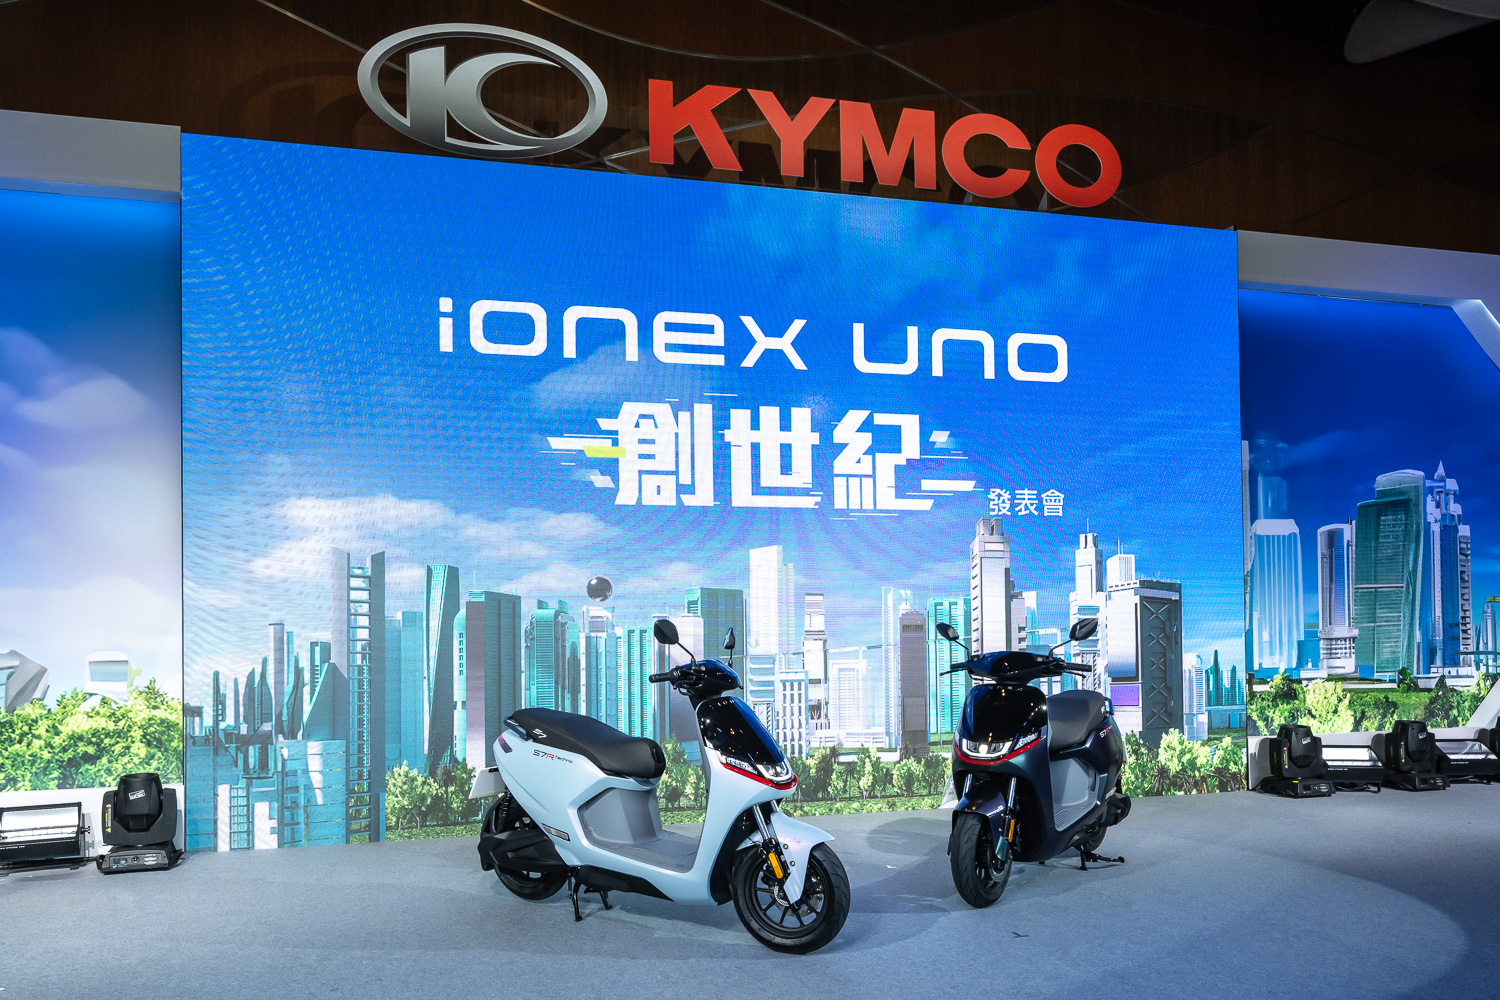 KYMCO 發表 Ionex UNO 宣告創世紀來臨 全球首發「可充可換 充換合一」技術 打造電動車無所不在的世界 @3C 達人廖阿輝